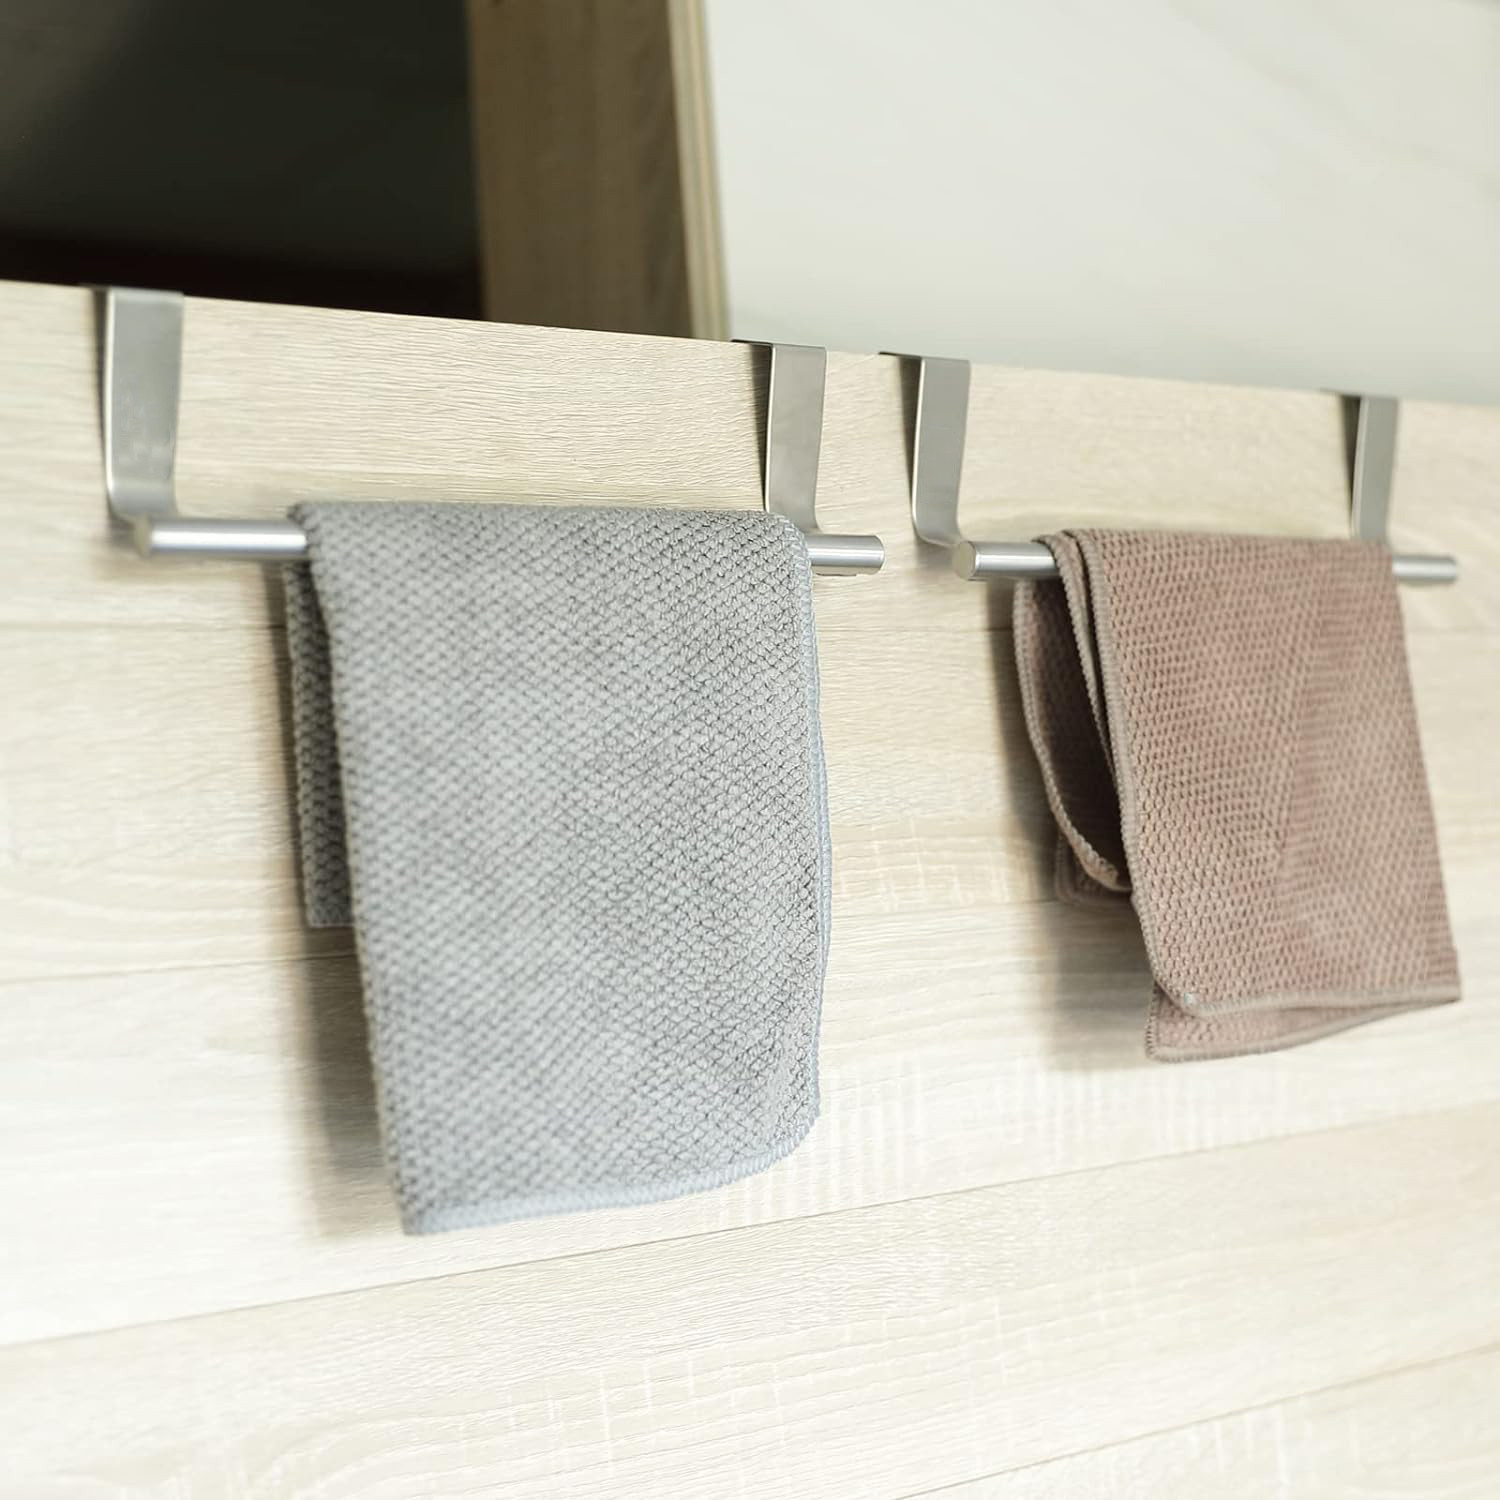 Kuber Industries Tissue Paper Holder|Wall Mounted Napkin Holder For Bathroom|Multipurpose Cloth & Tissue Paper Holder|Stainless Steel|Easy Installation|Pack of 2|Grey